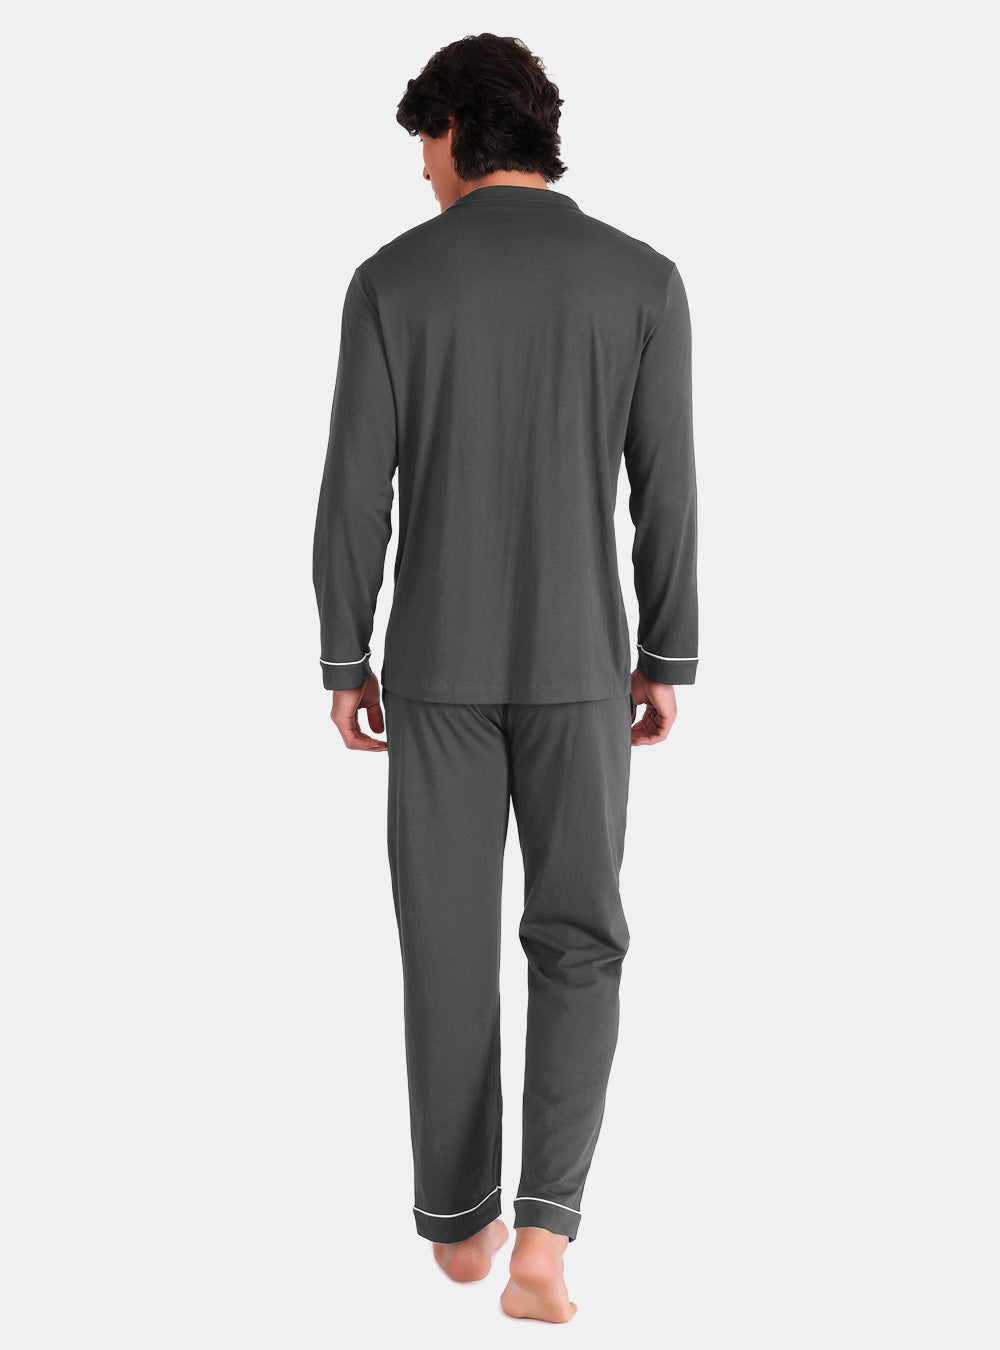 David Archy Sleepwear Set Flannel Button-Down V-Neck Lounge Wear